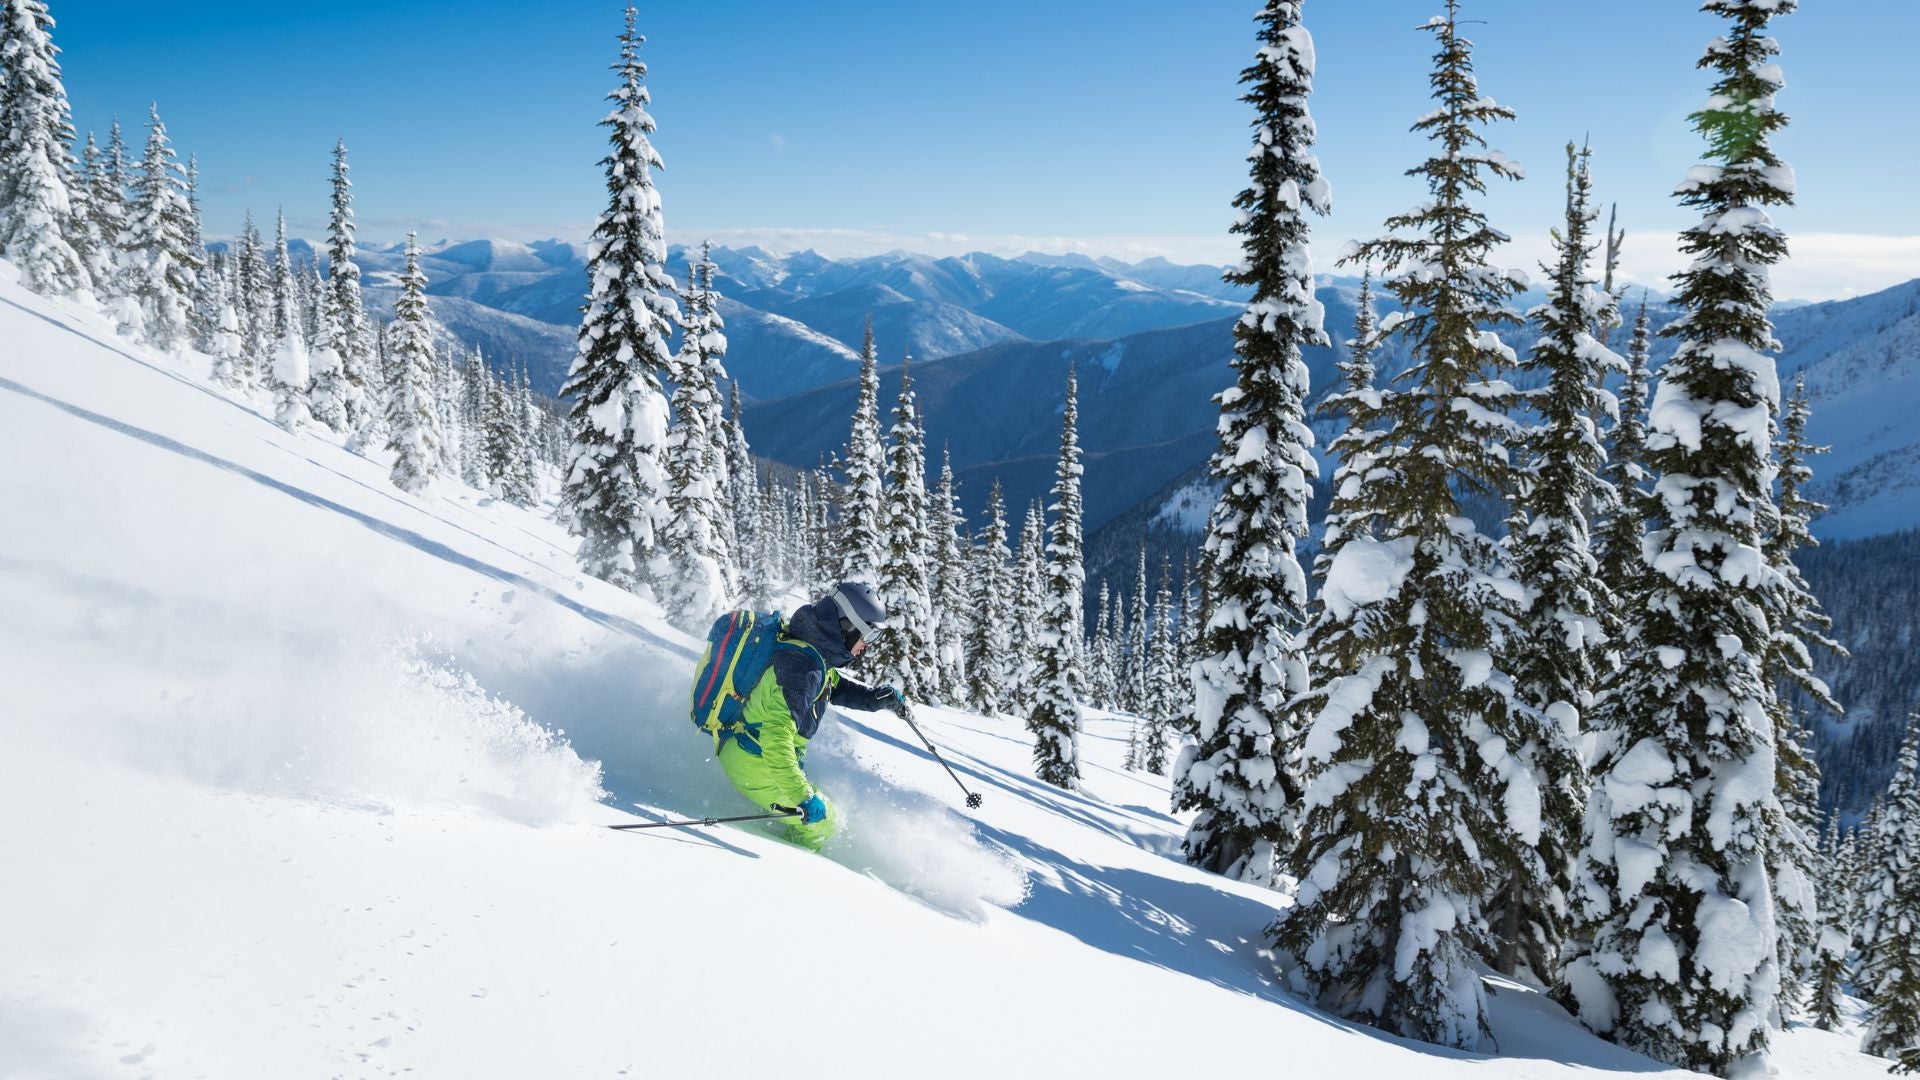 UTAH SKI GEAR - Everything You Need To Ski Affordably – Utah Ski Gear